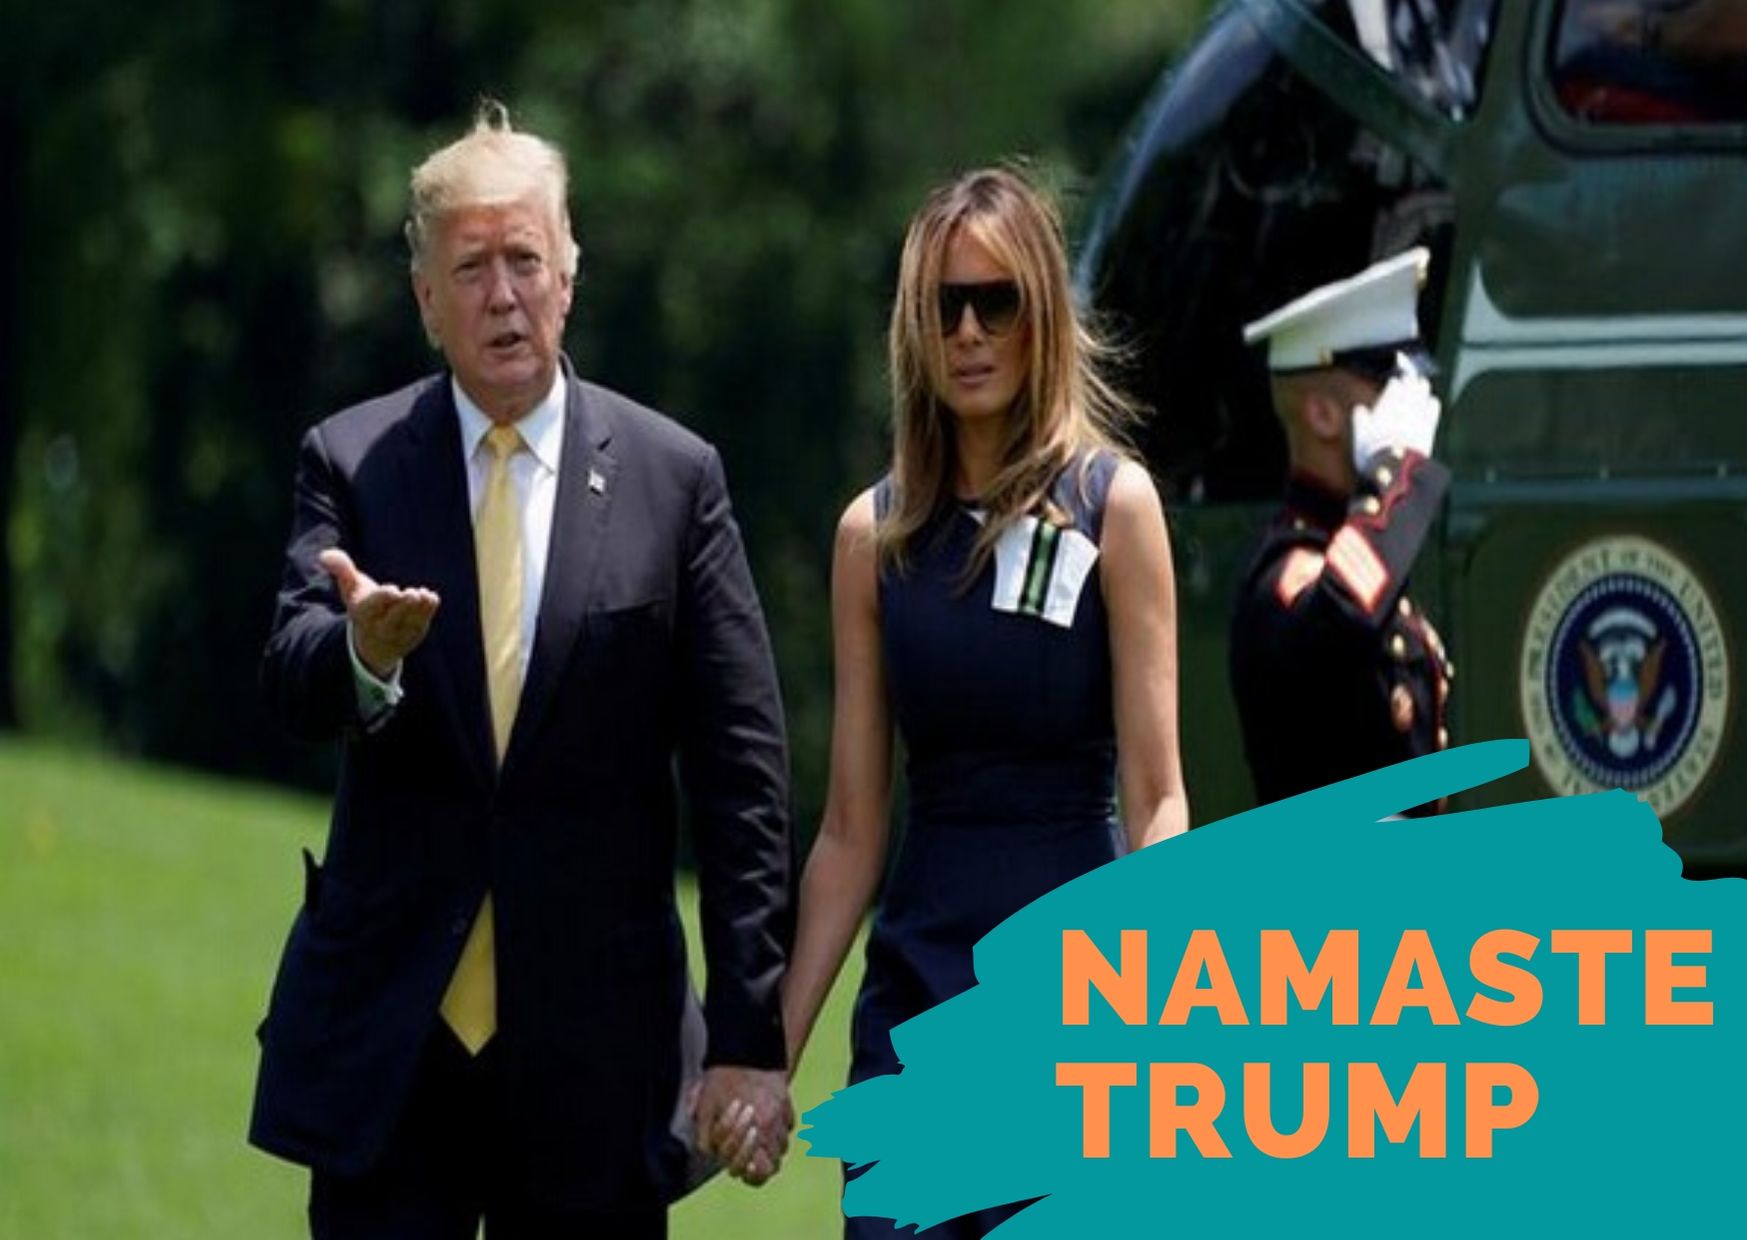 Namaste Trump